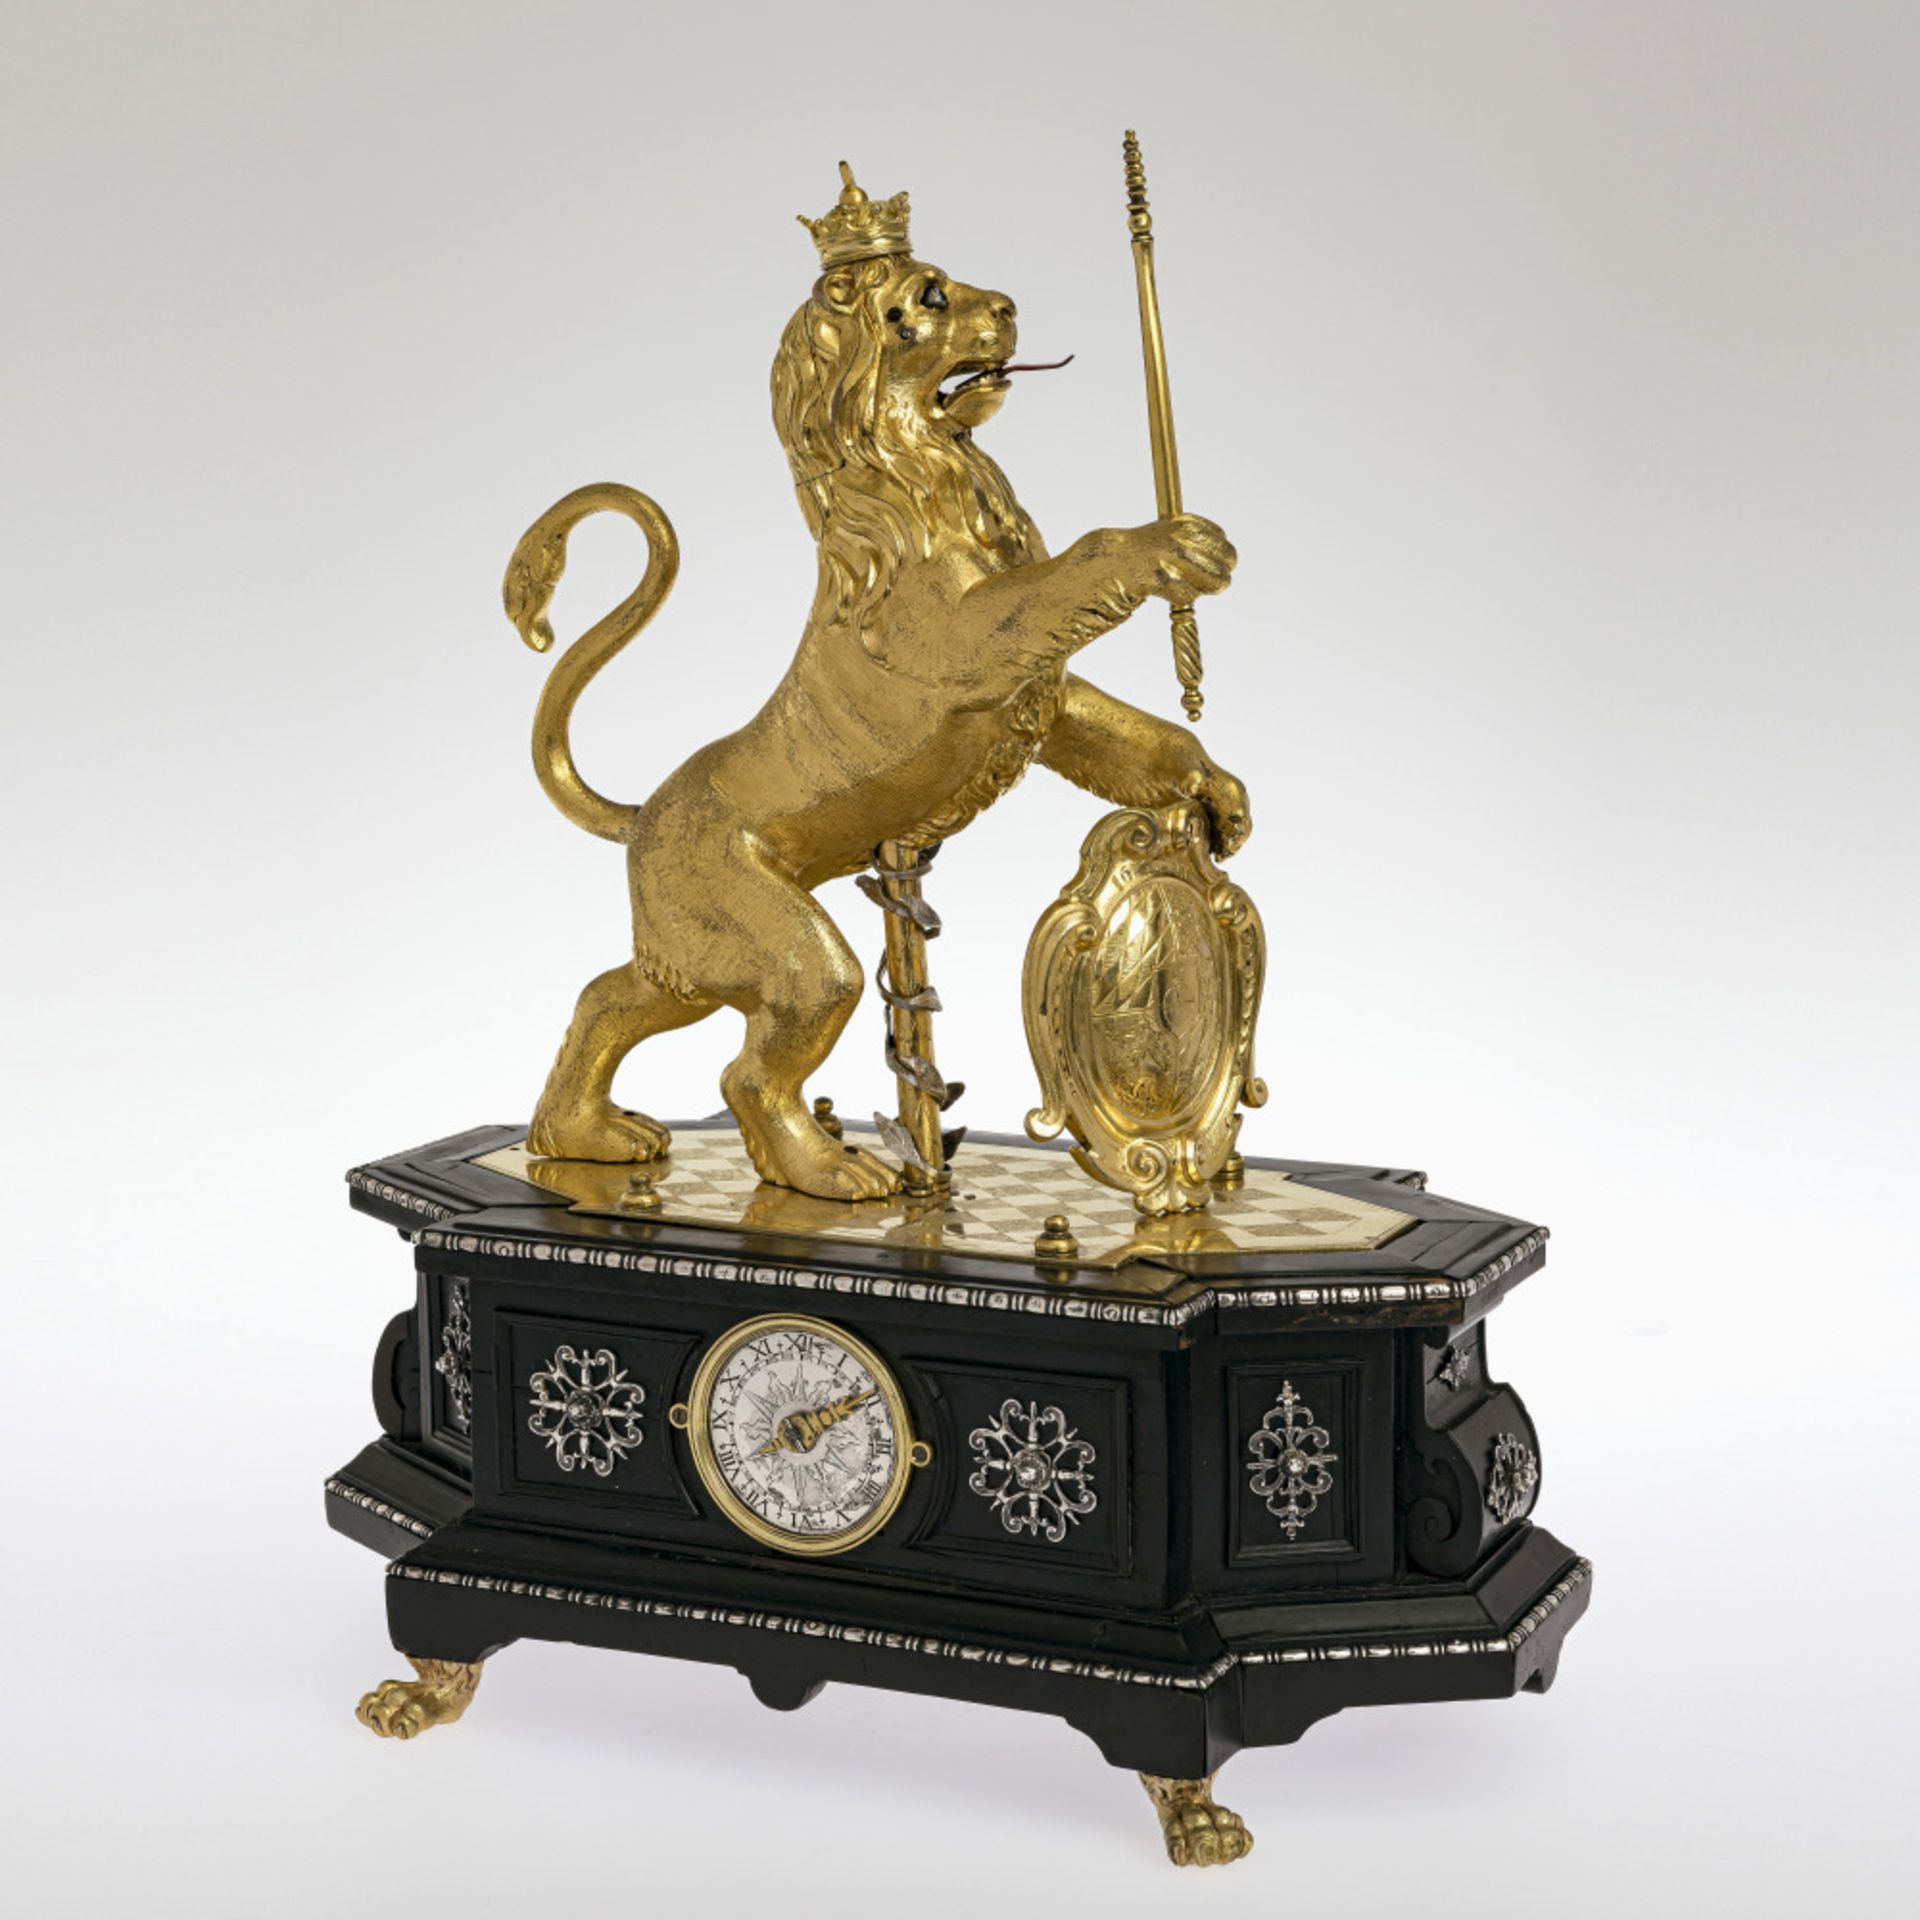 A figural clock with "Bavarian lion" automaton - South German (Augsburg?), circa 1627